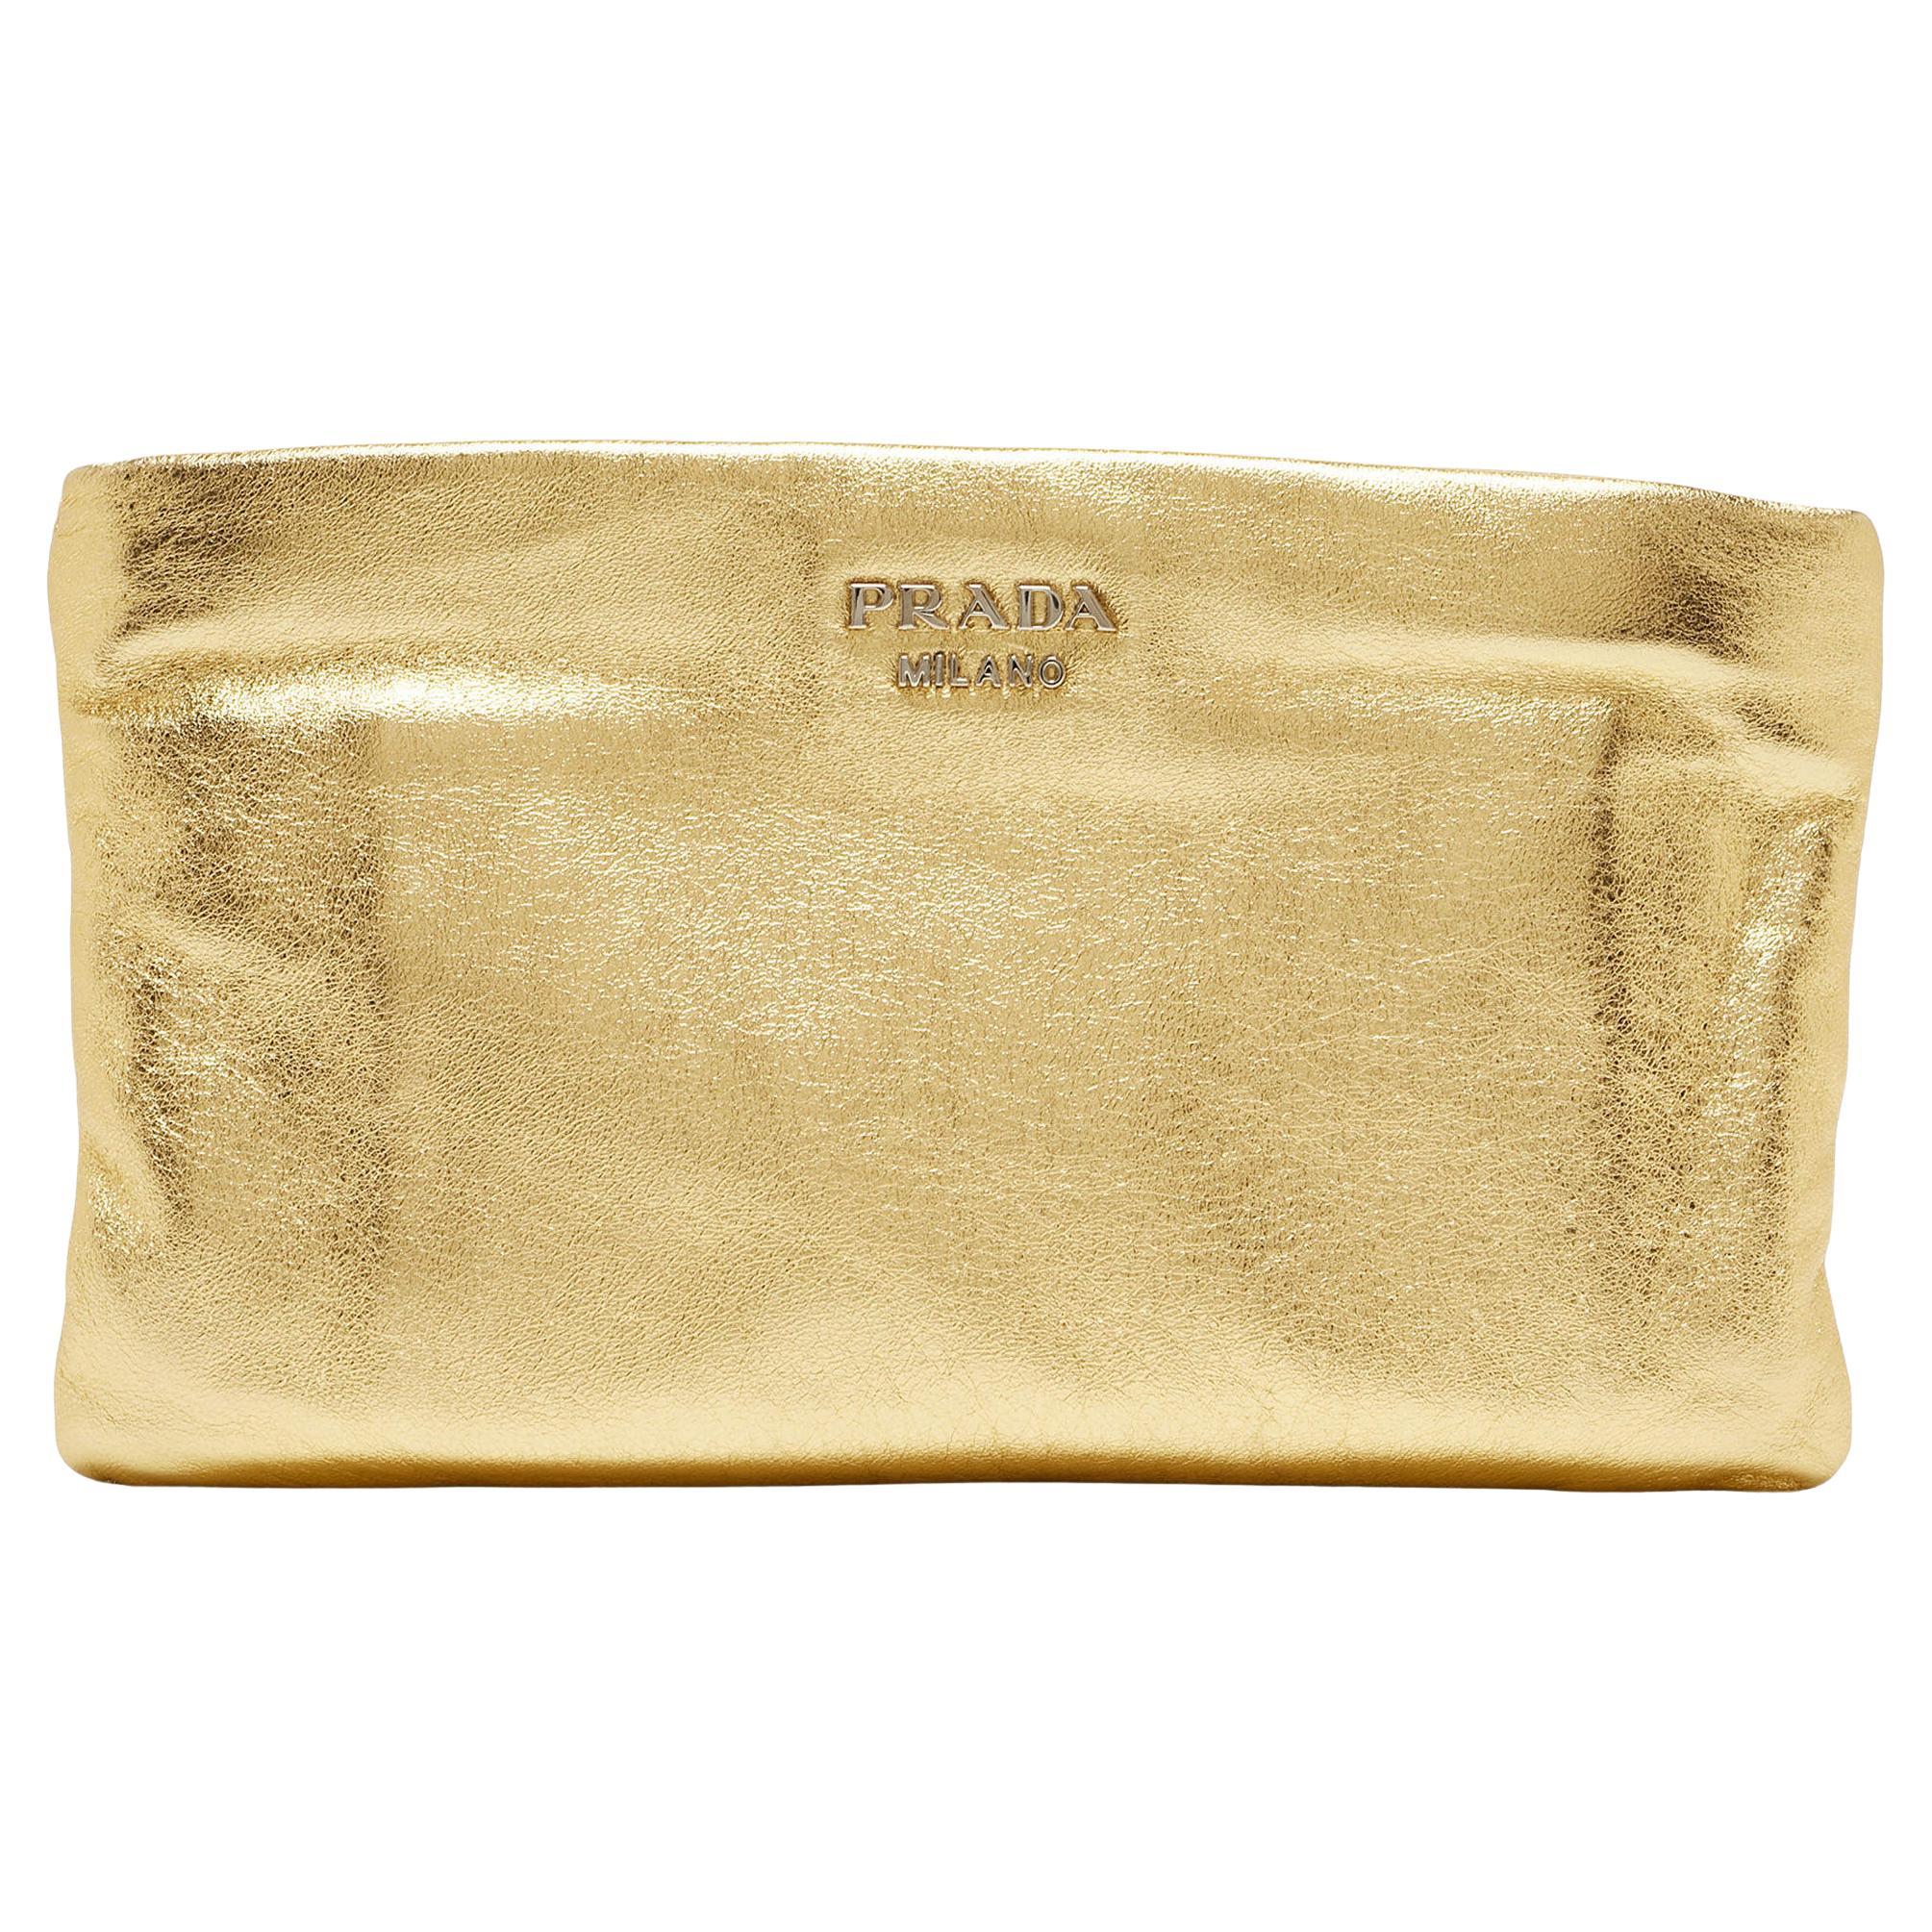 Prada Metallic Gold Leather Double Zip Clutch